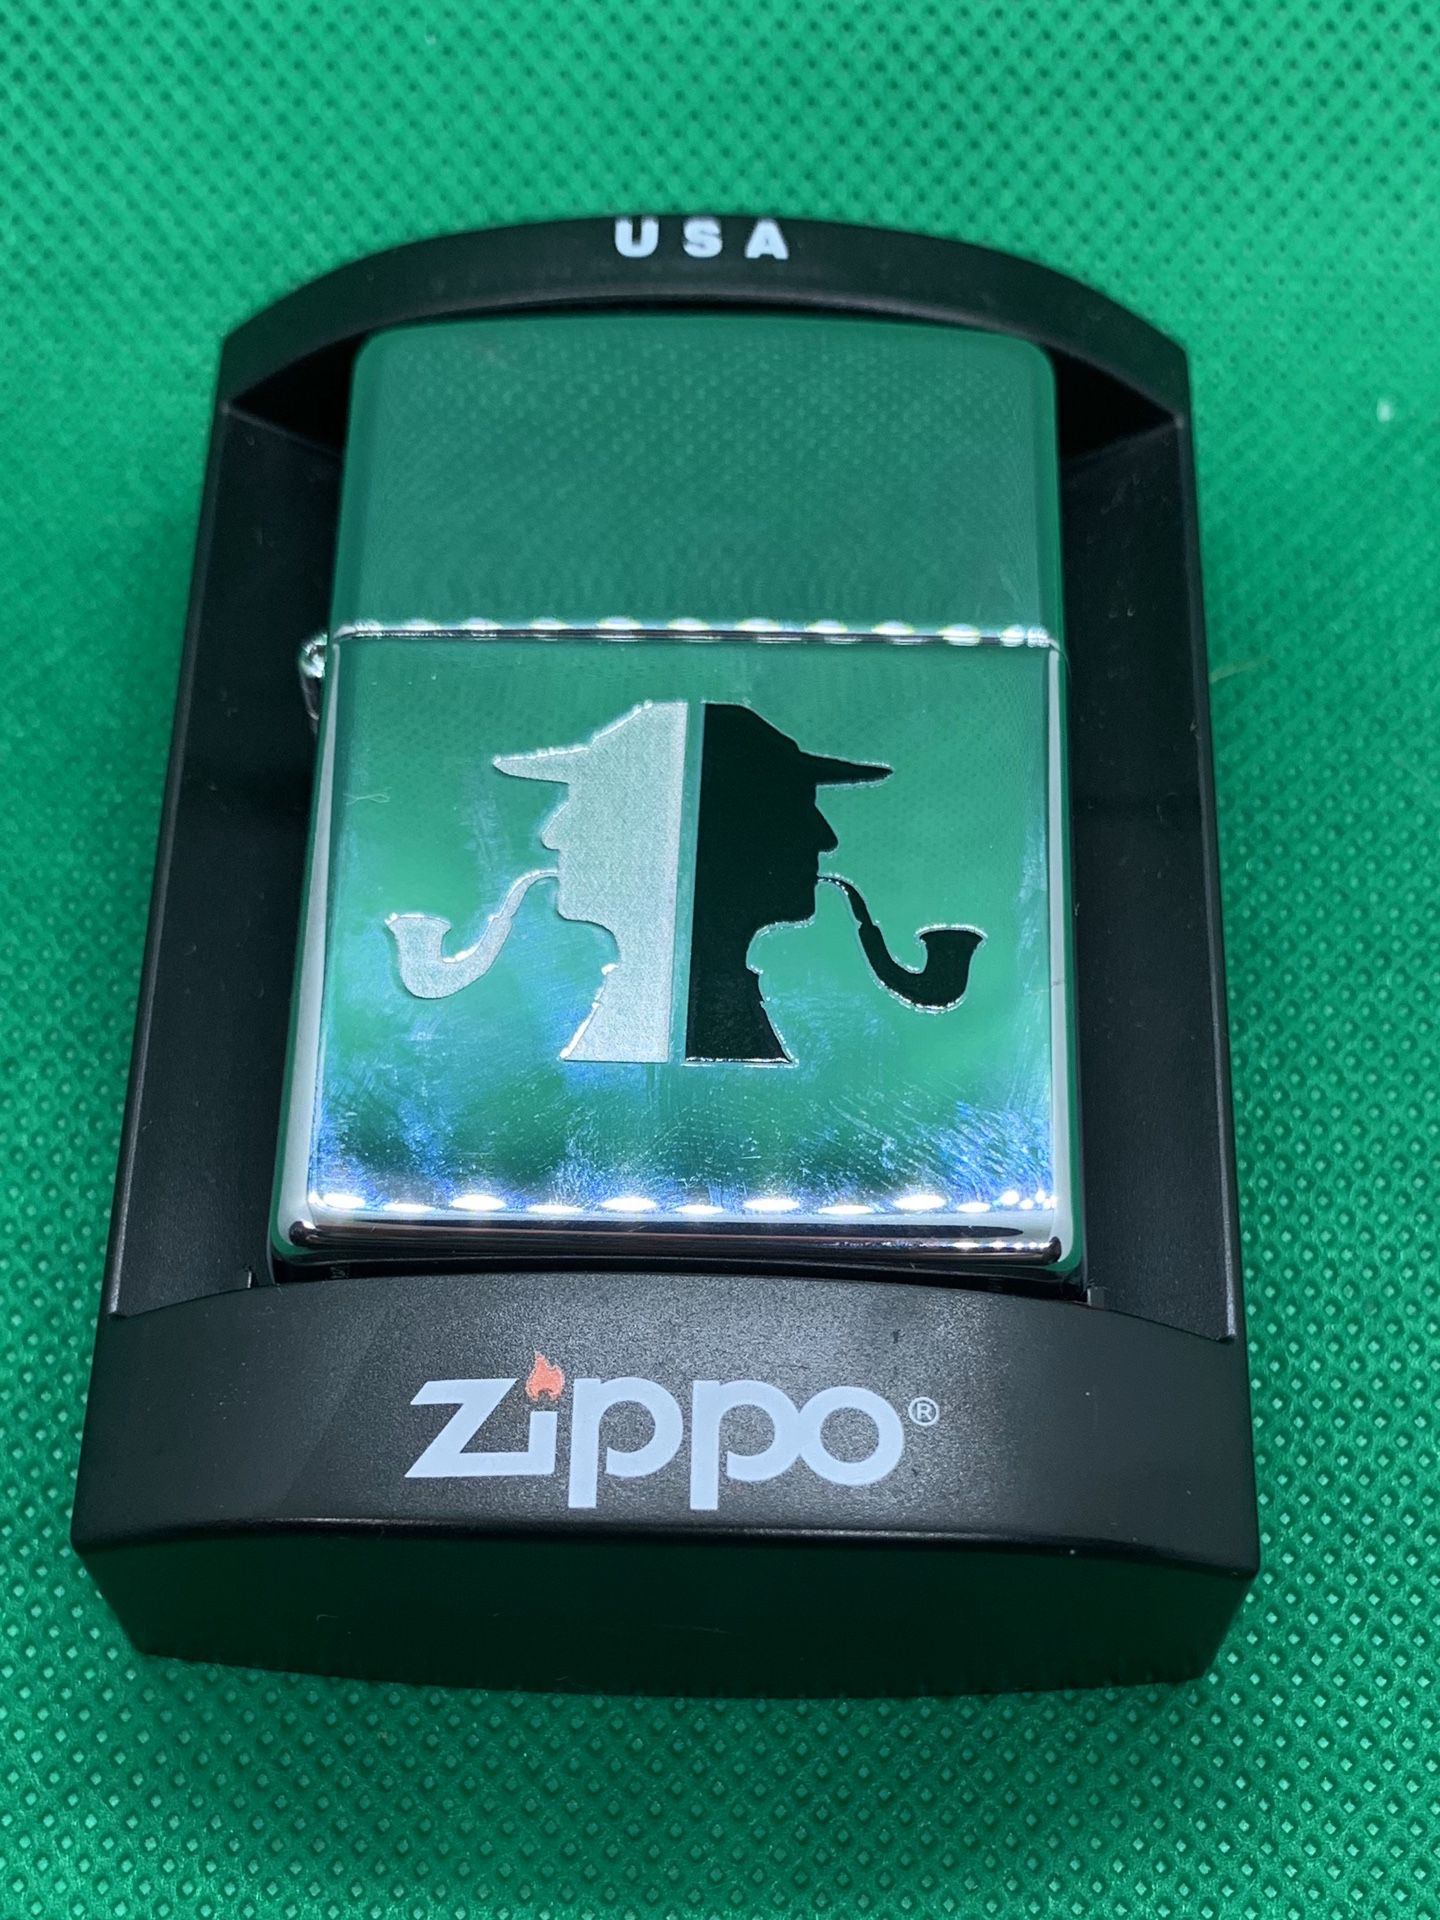 Zippo Pipe Lighter, rare never opened or used original case